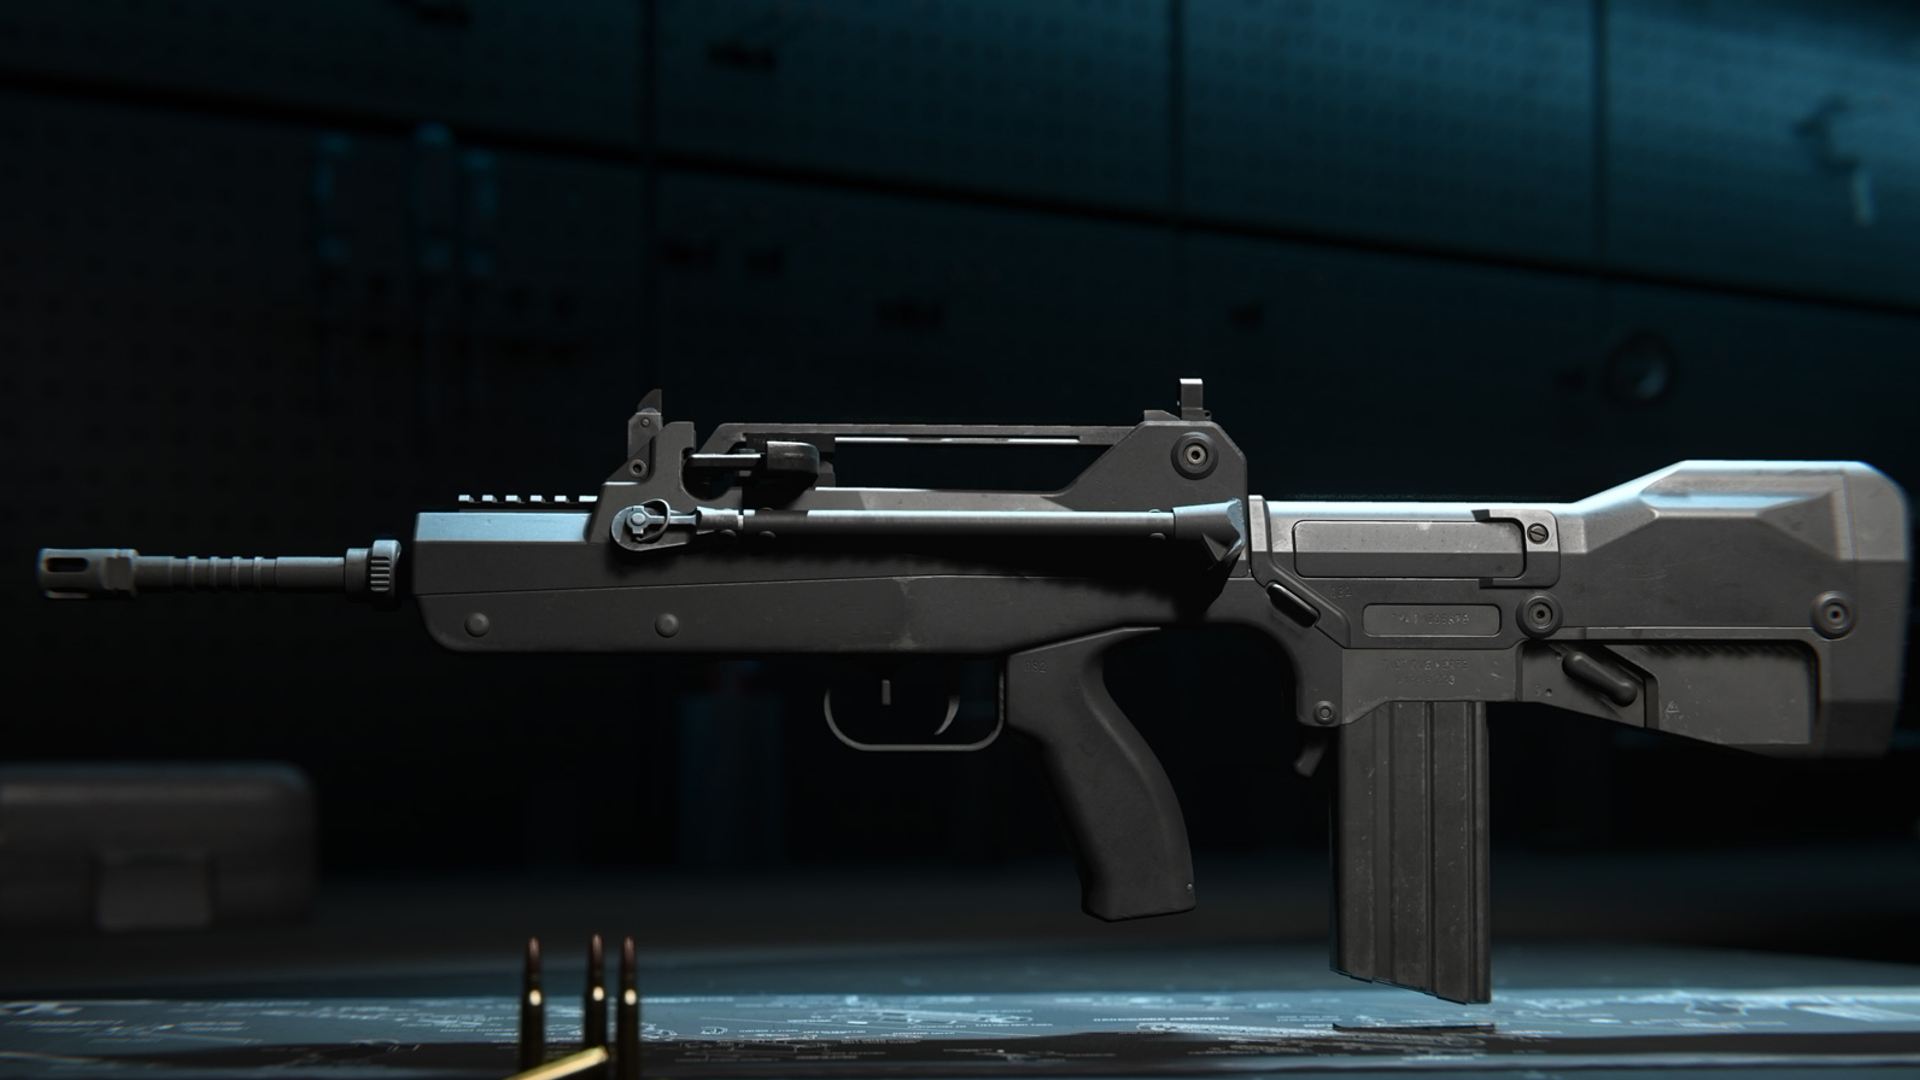 Call of Duty Advanced Warfare reveals new weaponry, the best guns